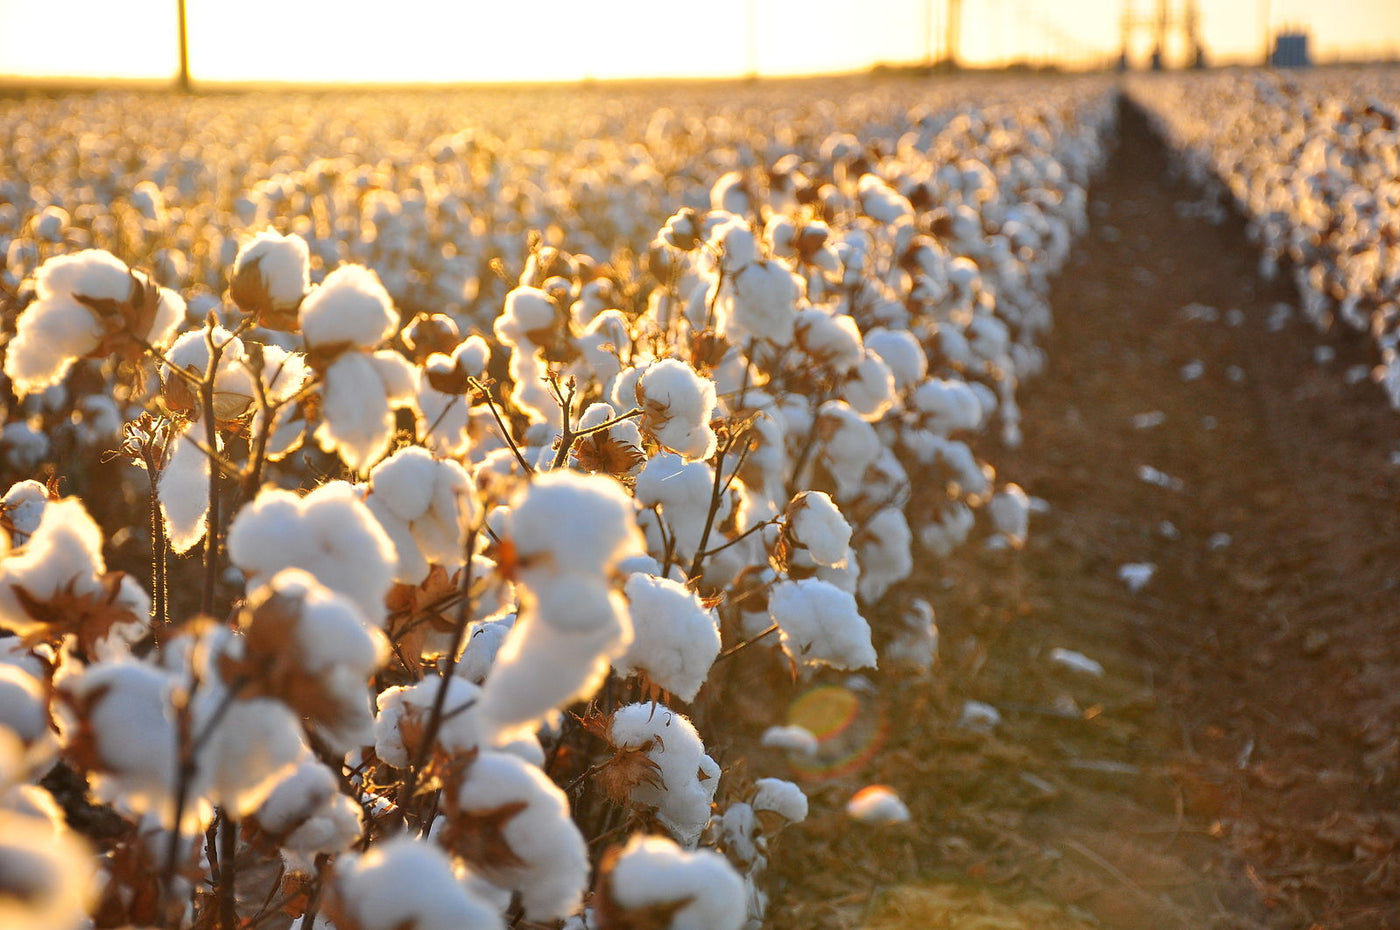 large cotton field